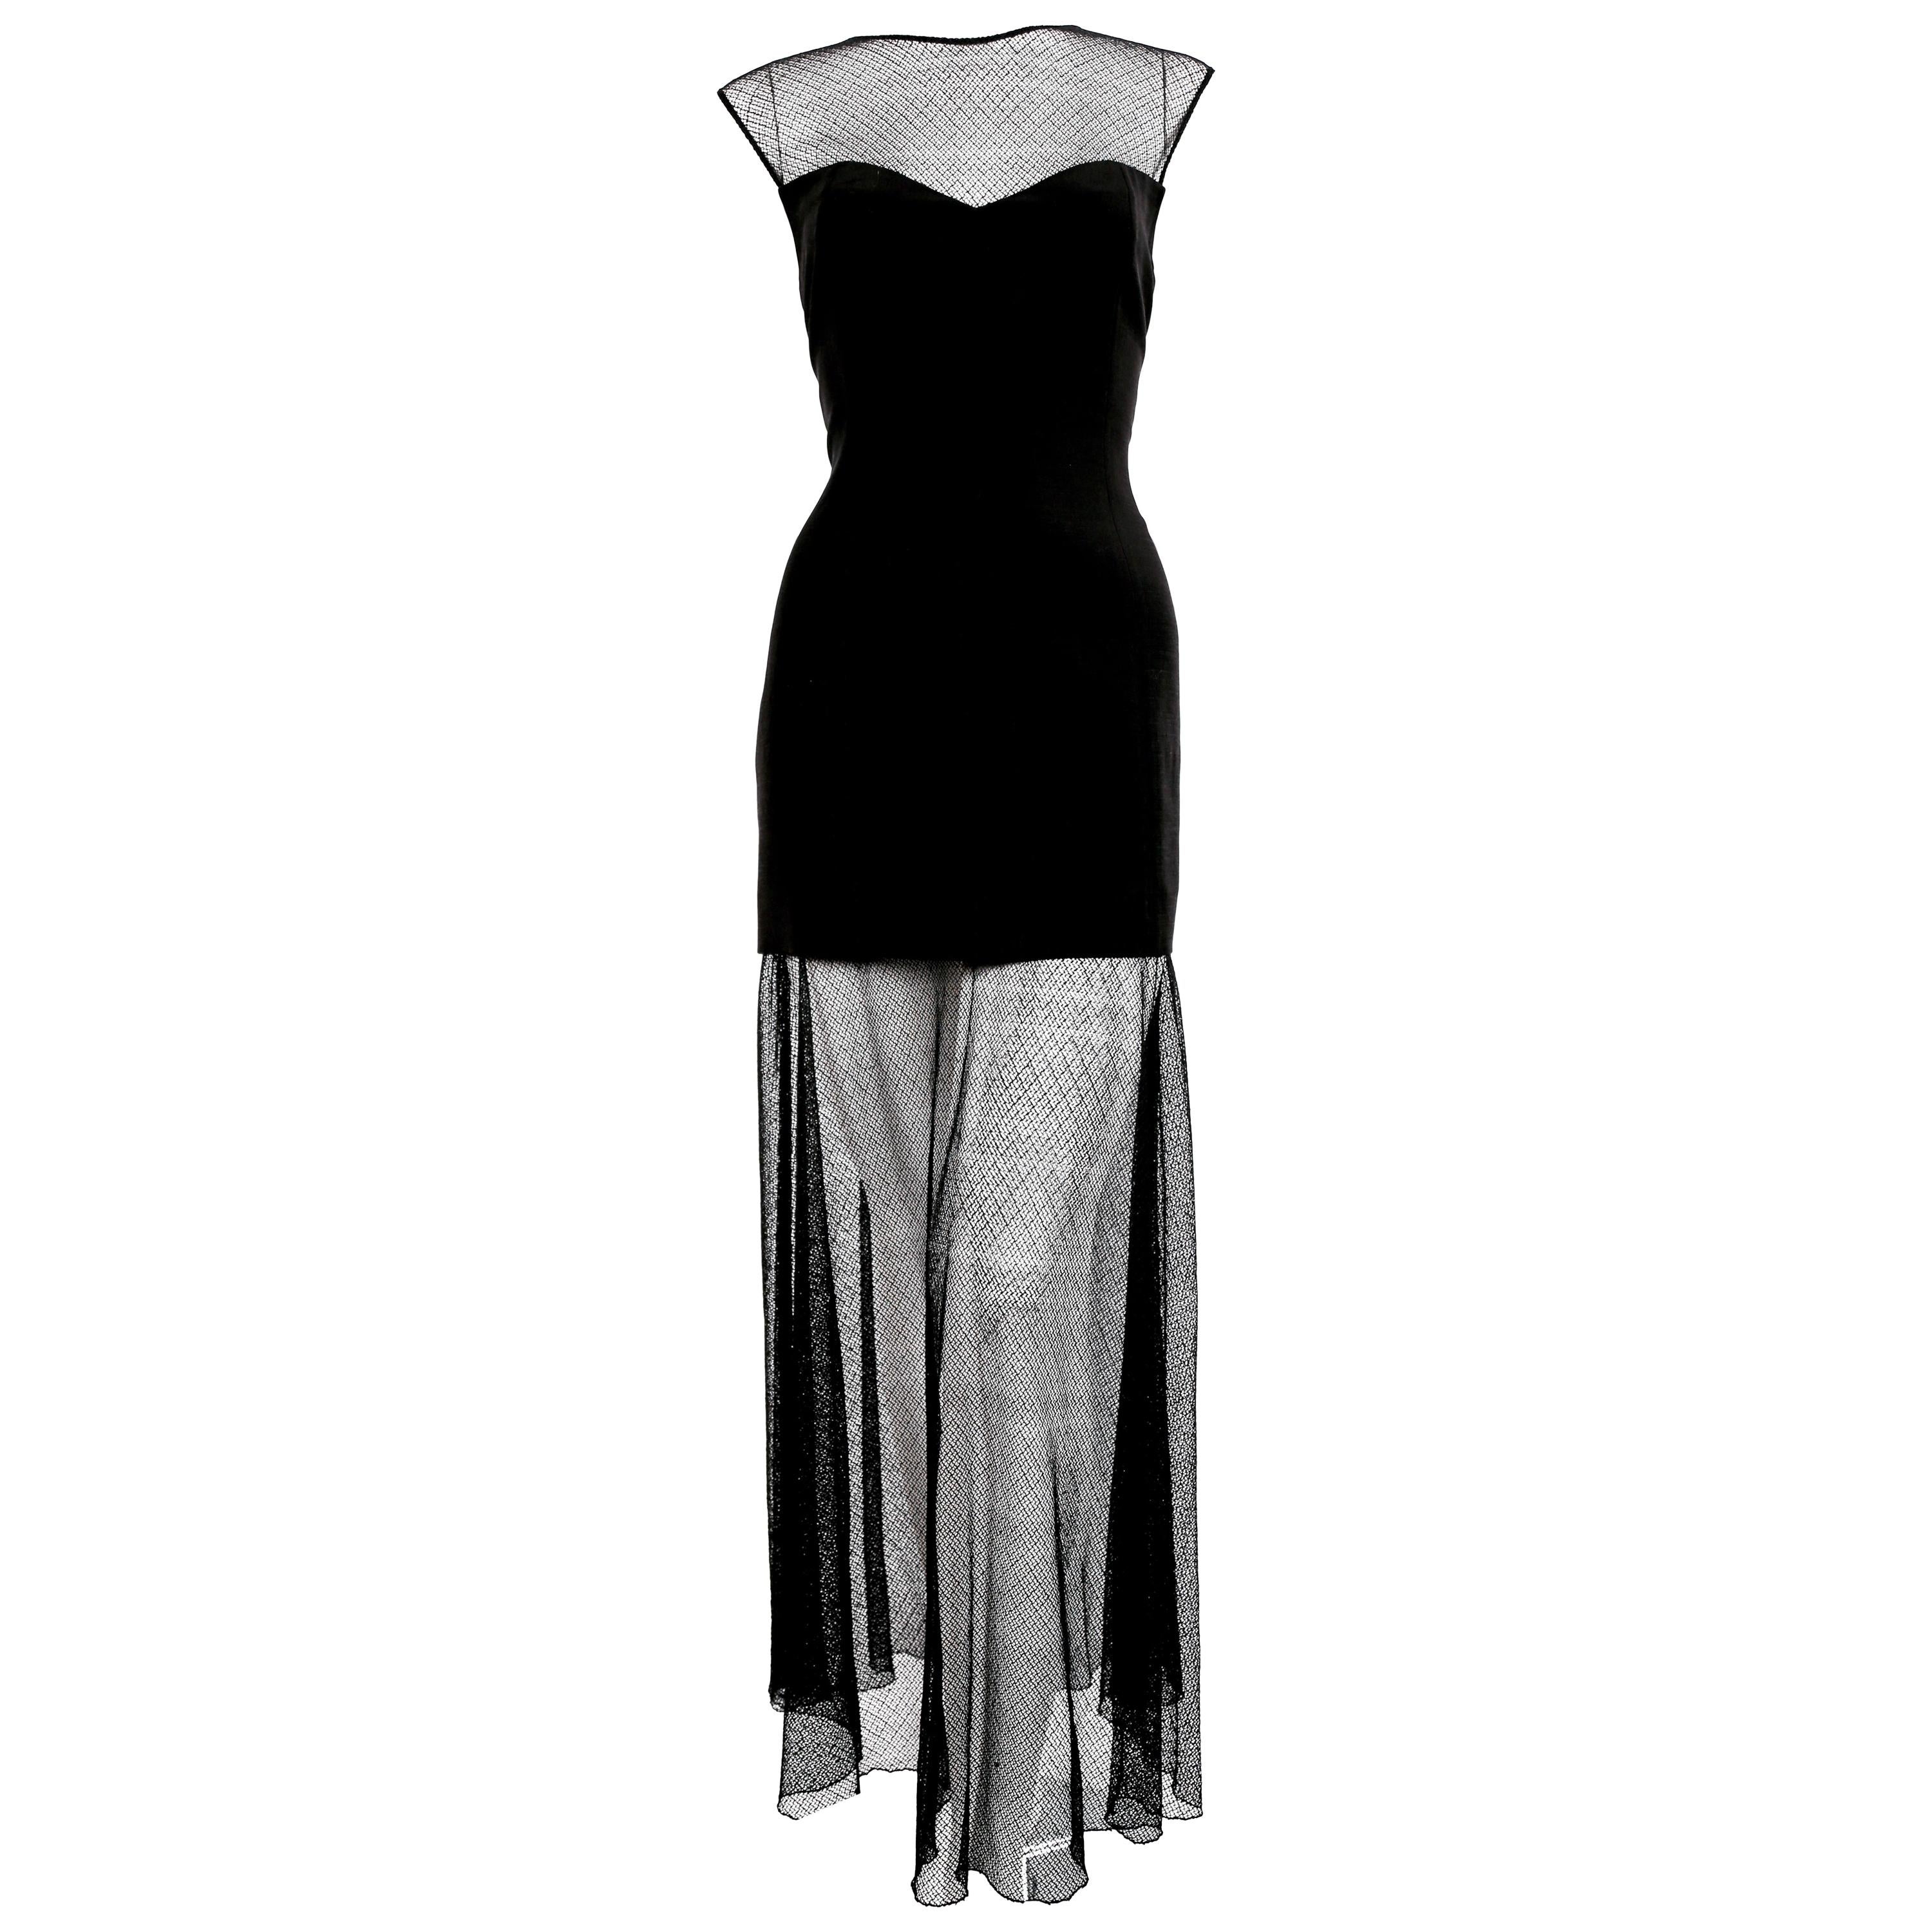 1990's KARL LAGERFELD black dress with sheer neckline and hemline For Sale